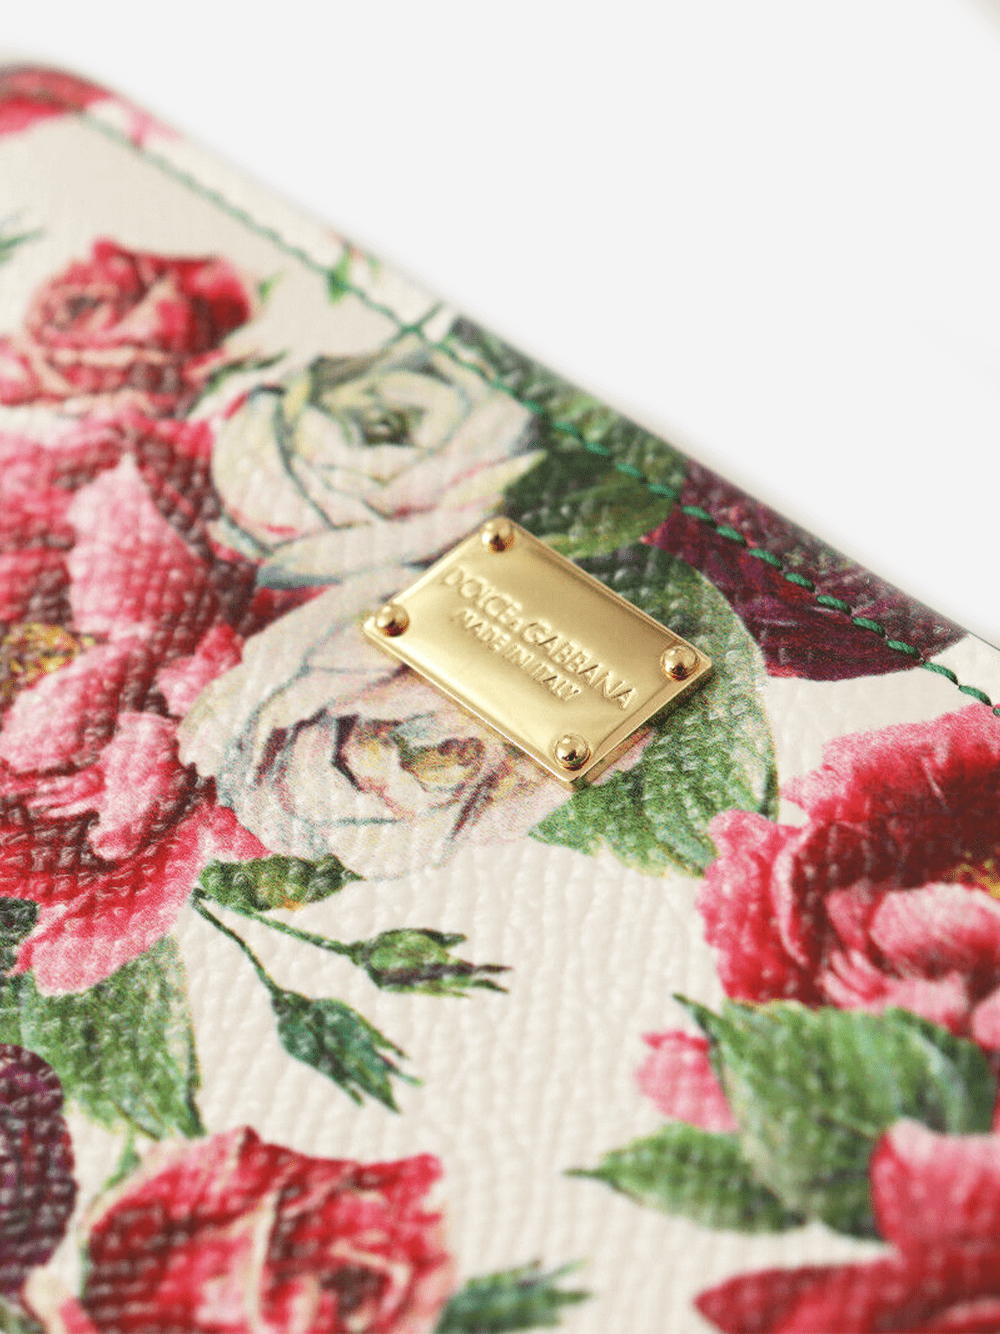 Dolce & Gabbana Floral-Print Wallet